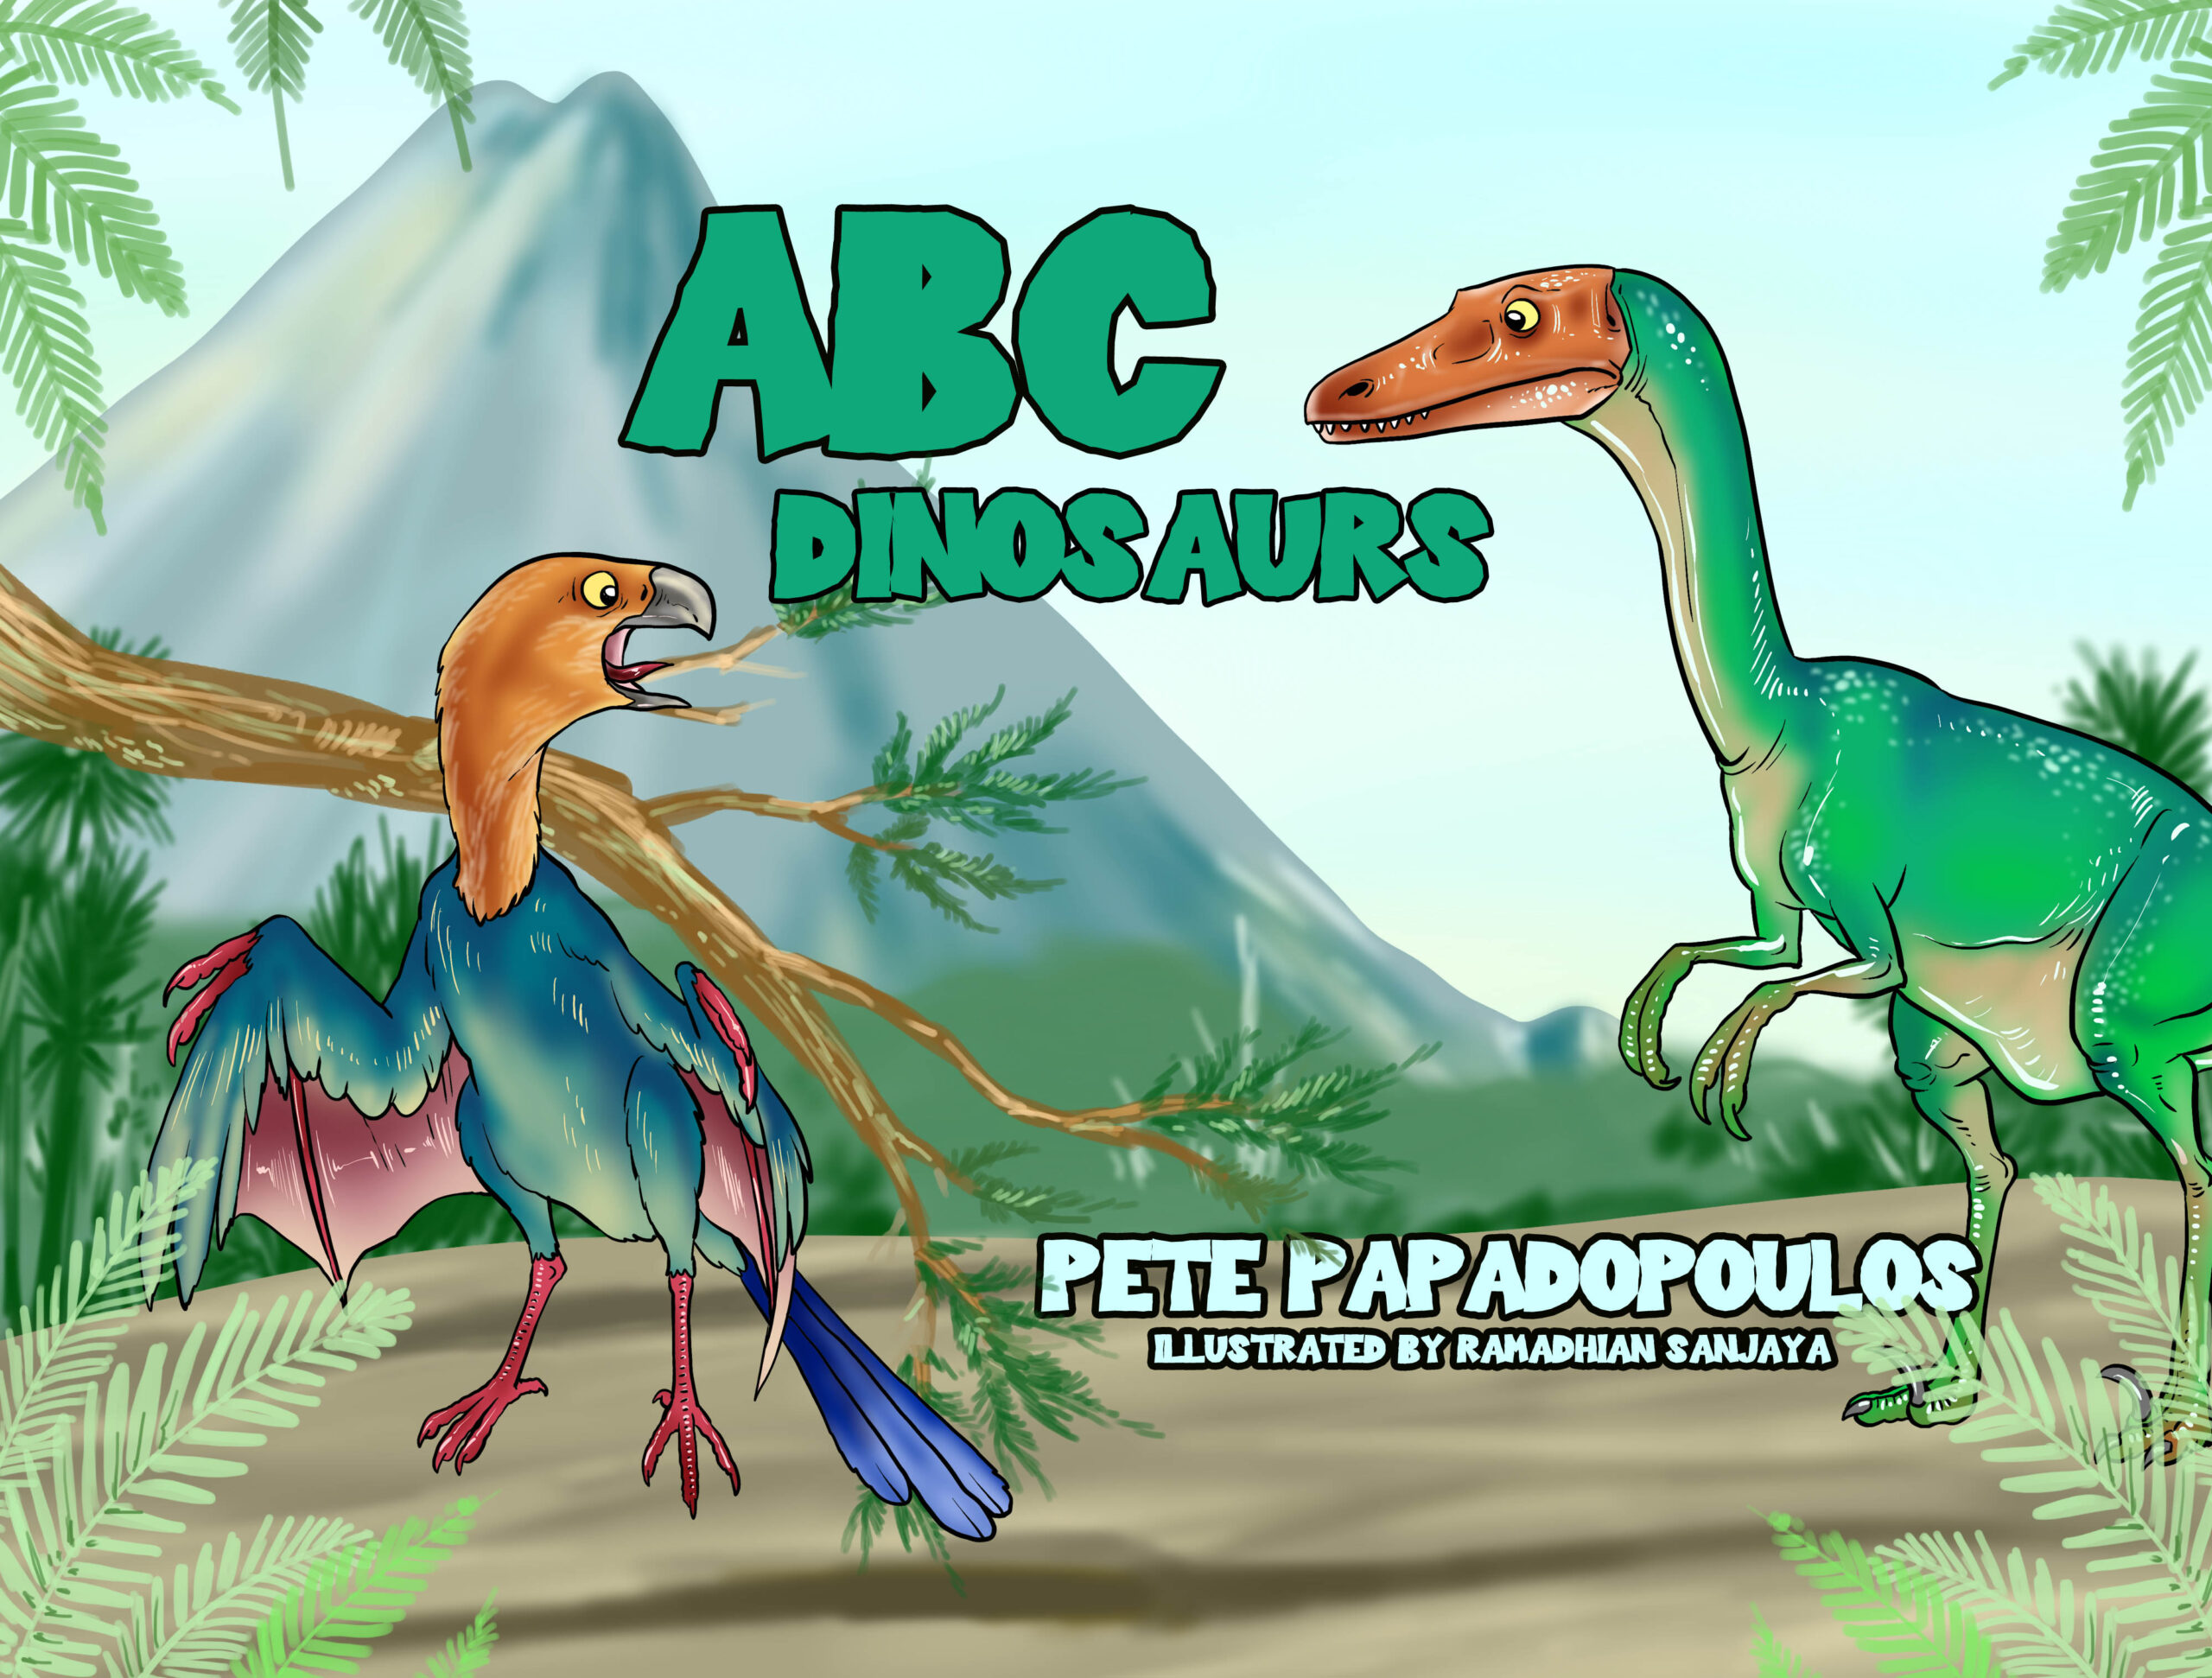 ABC Dinosaurs – ABC Kids Book on Dinosaurs